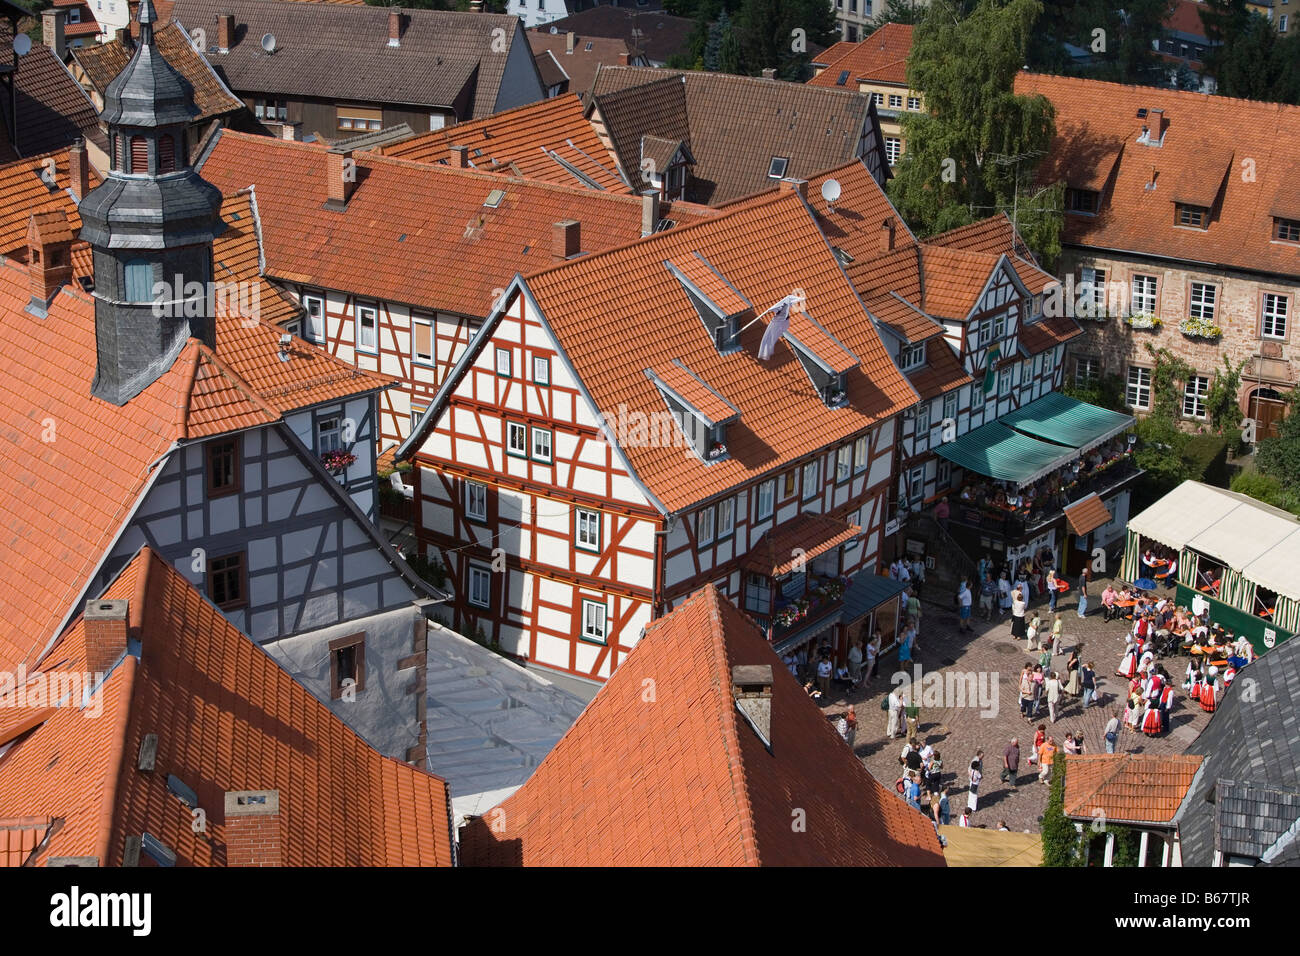 Timberframe Houses and Marktplatz Central Square, View from Schlitz Tower, Schlitz, Vogelsberg, Hesse, Germany Stock Photo